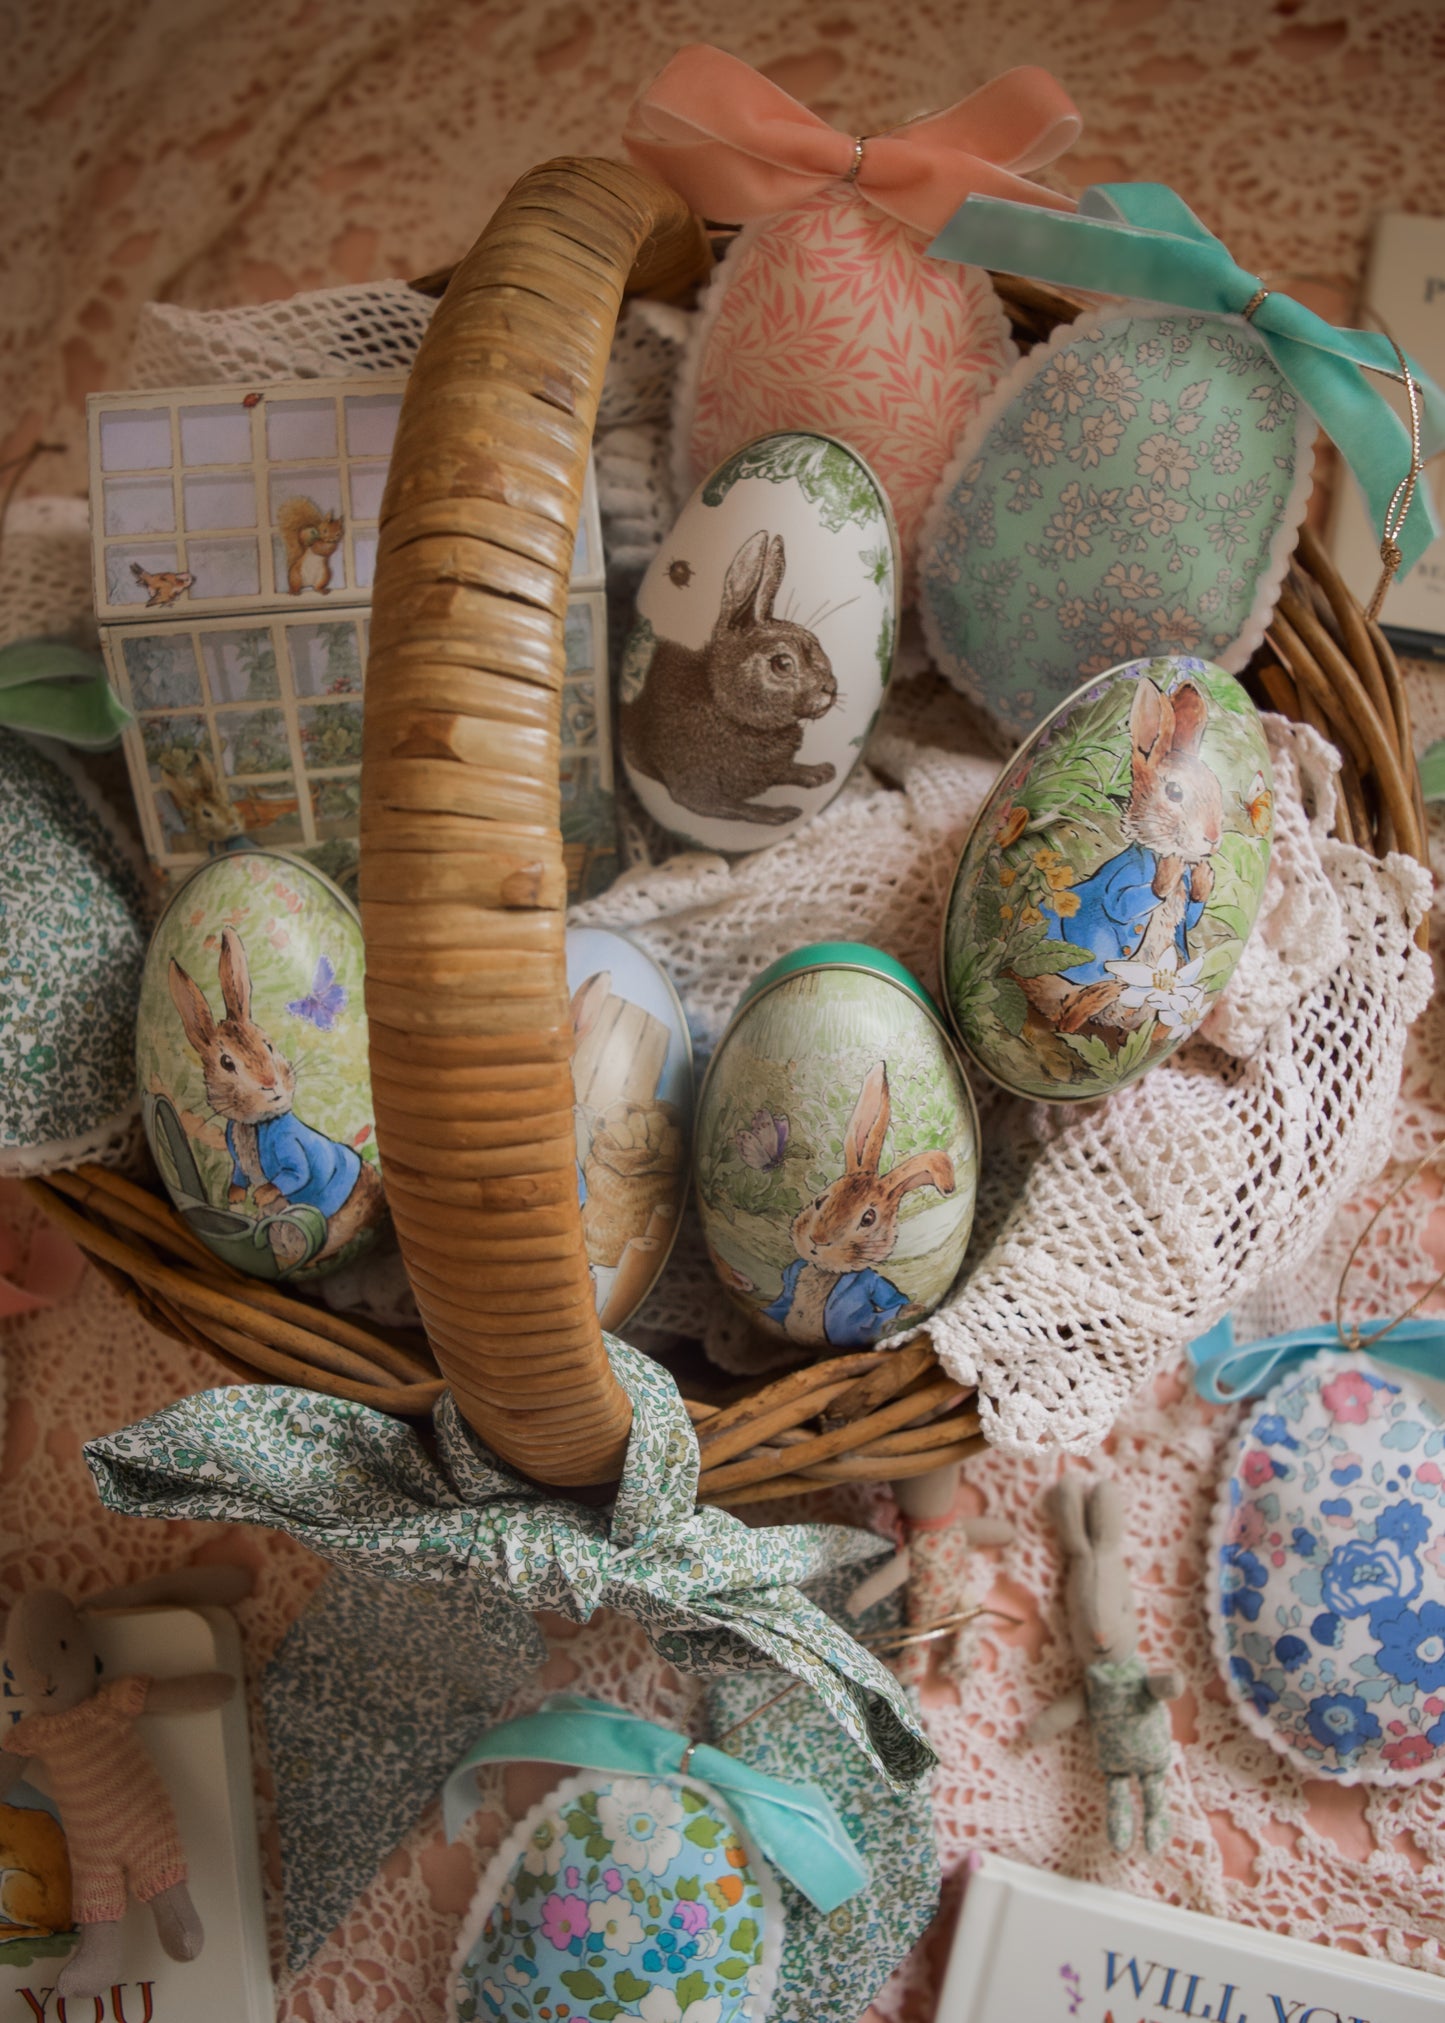 Peter Rabbit Egg Tins - Assorted